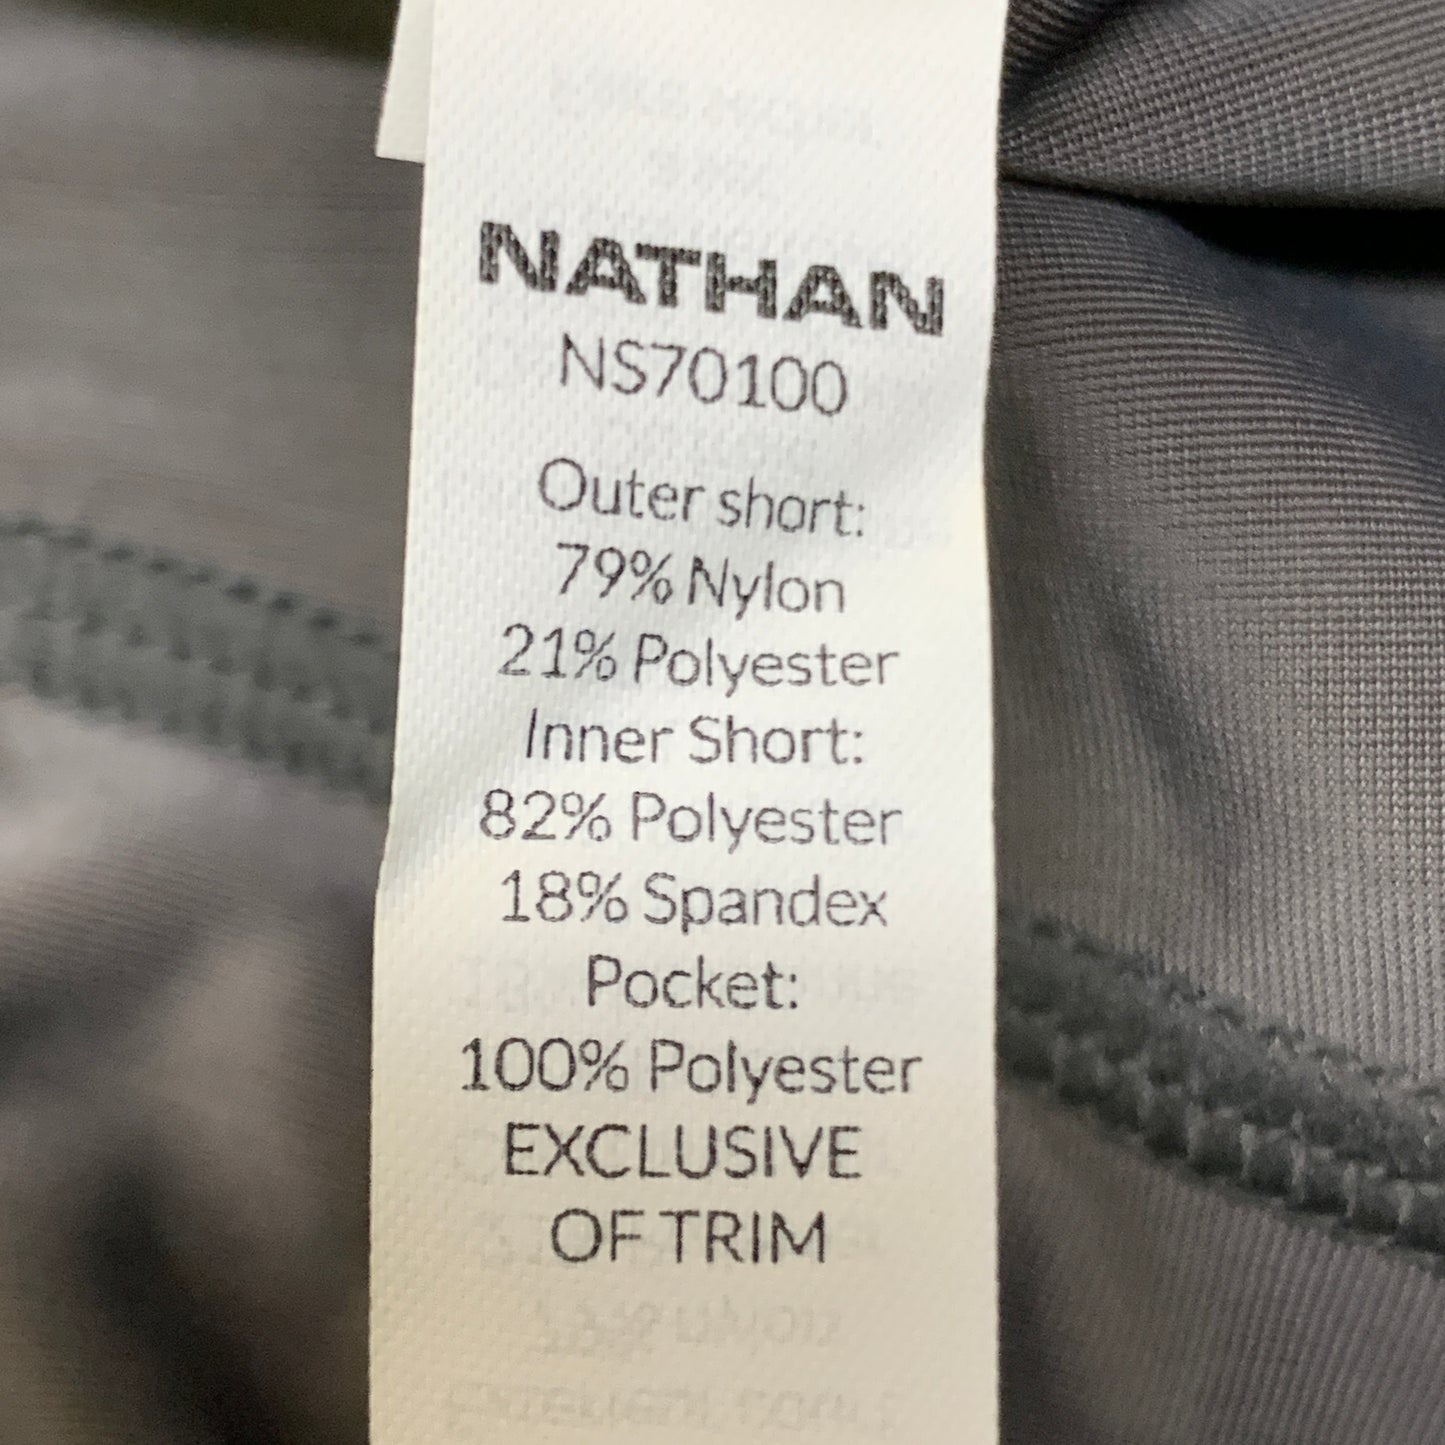 NATHAN Front Runner Shorts 5" Inseam Men's Mallard Blue Size L NS70100-60103-L